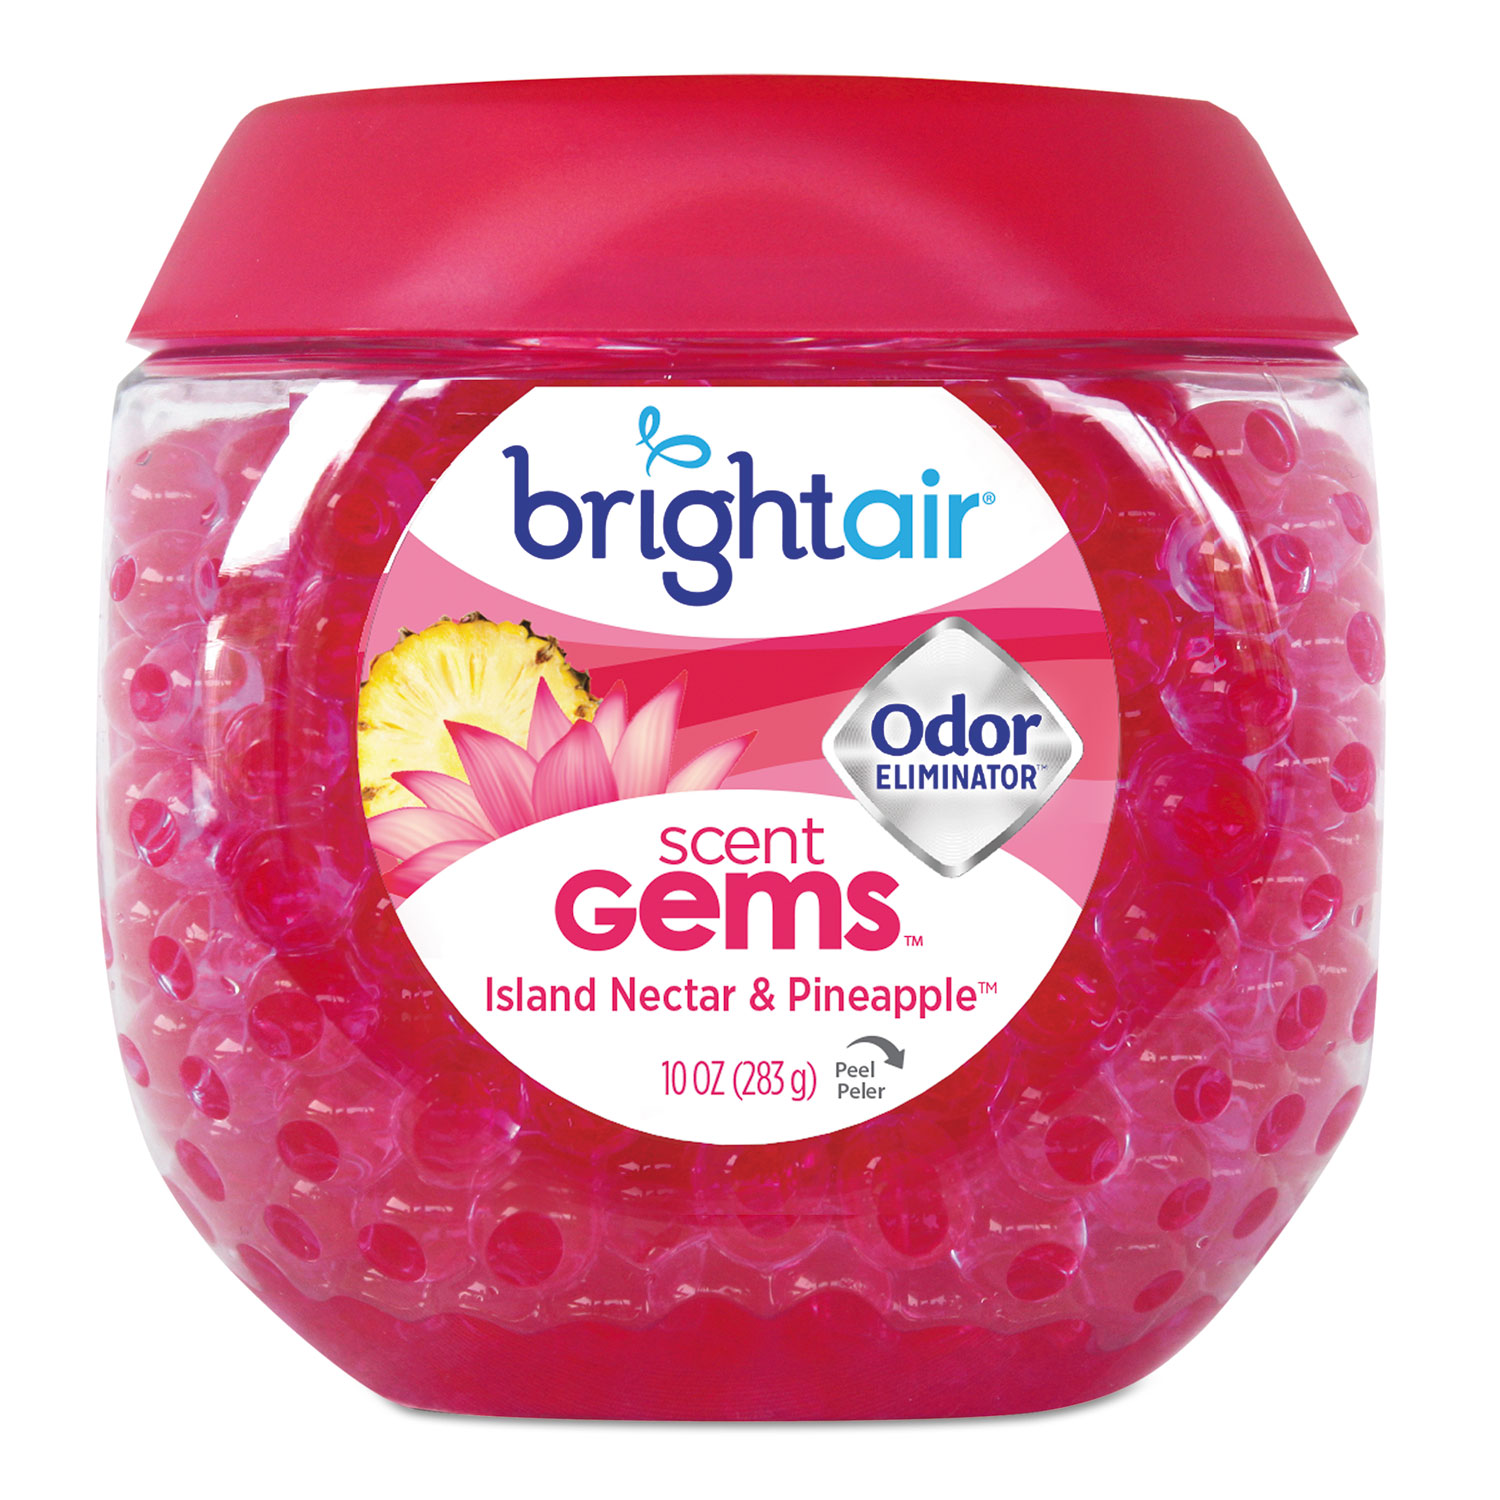  BRIGHT Air 900229 Scent Gems Odor Eliminator, Island Nectar and Pineapple, Pink, 10 oz Gel (BRI900229) 